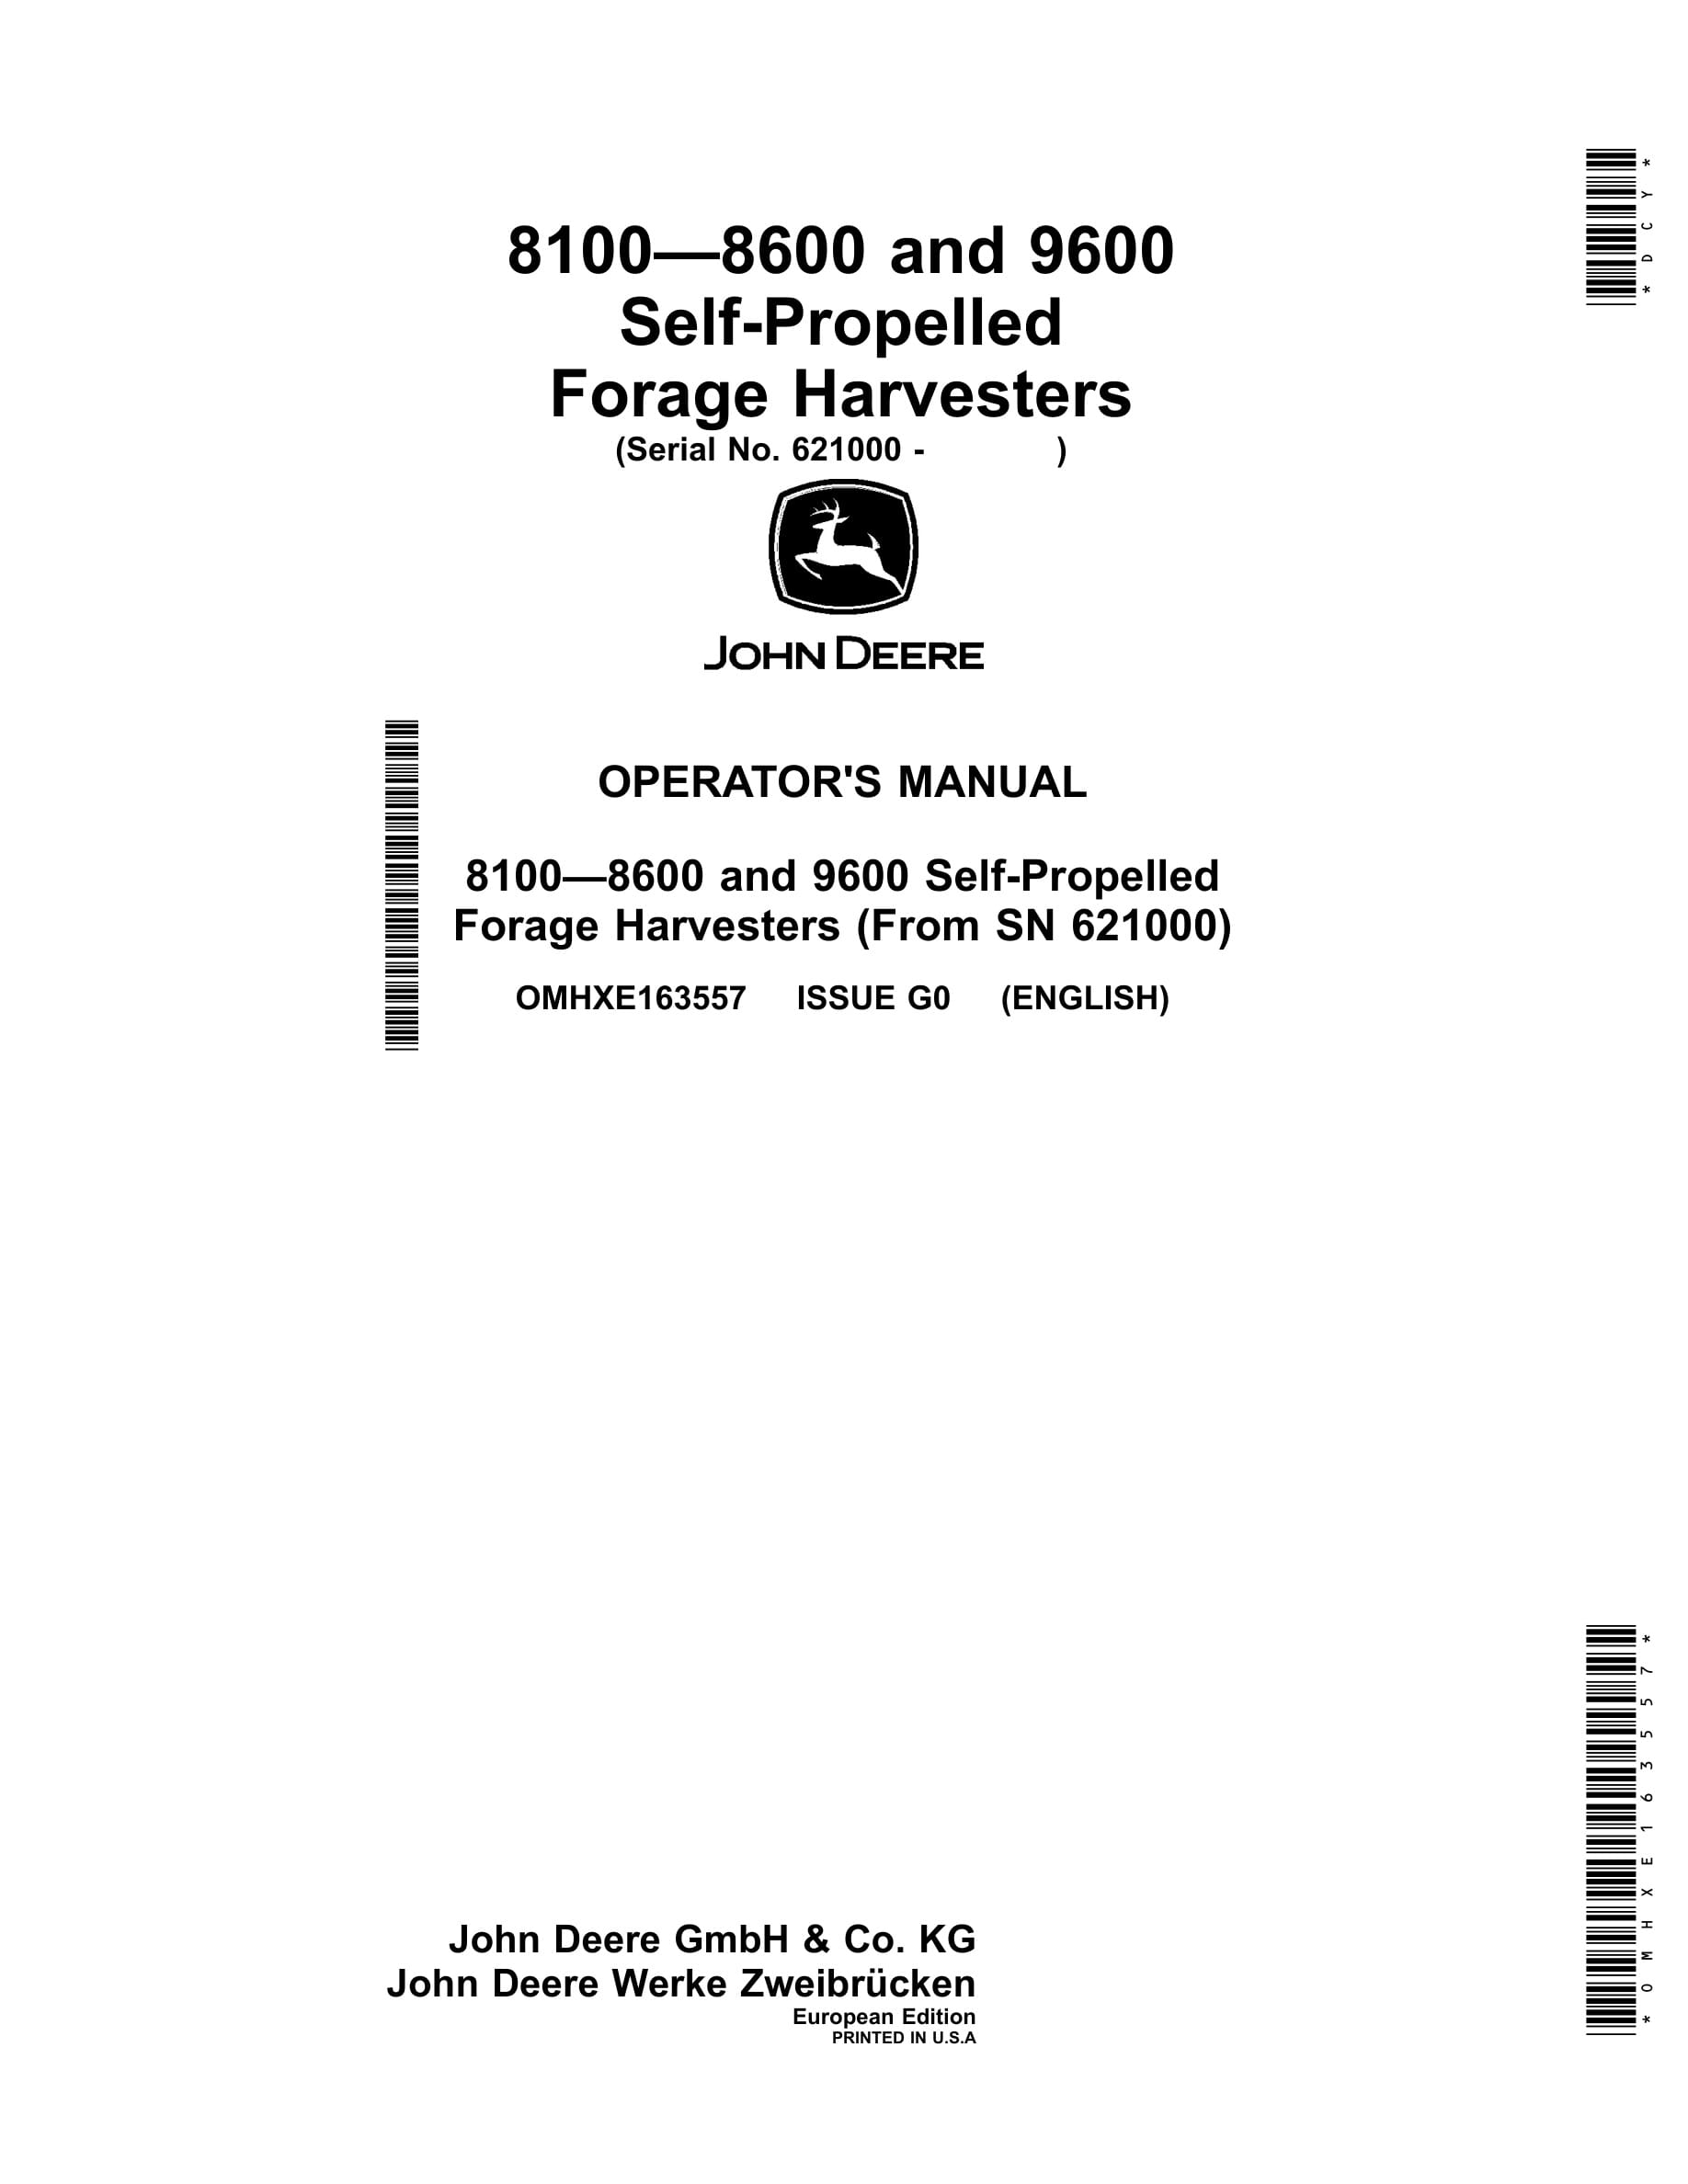 John Deere 8100 – 8600 and 9600 Self-Propelled Forage Harvester Operator Manual OMHXE163557-1